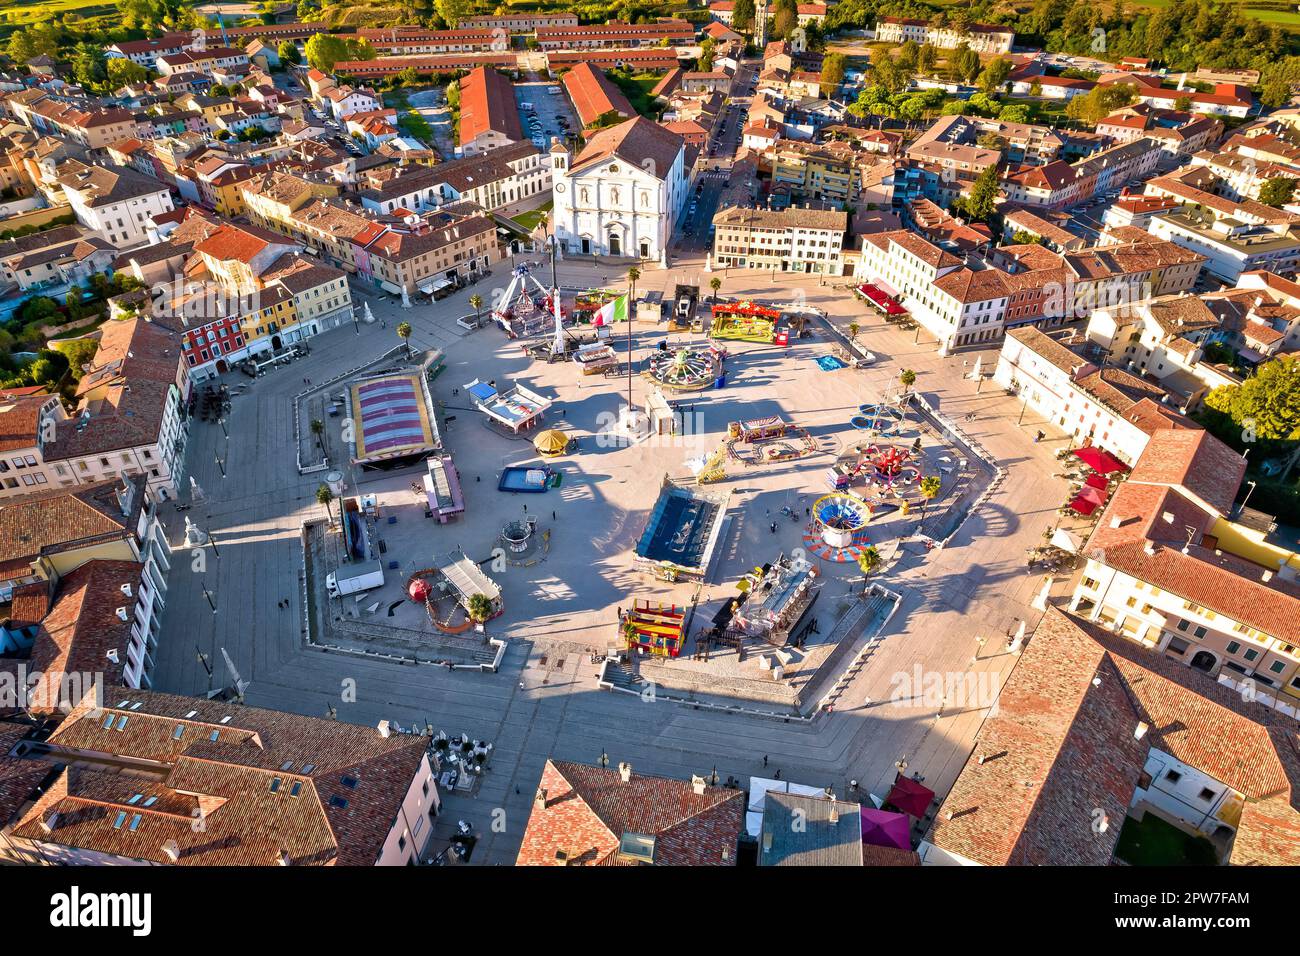 Town of Palmanova central hexagonal square and fun park aerial view, Friuli-Venezia Giulia region of Italy Stock Photo